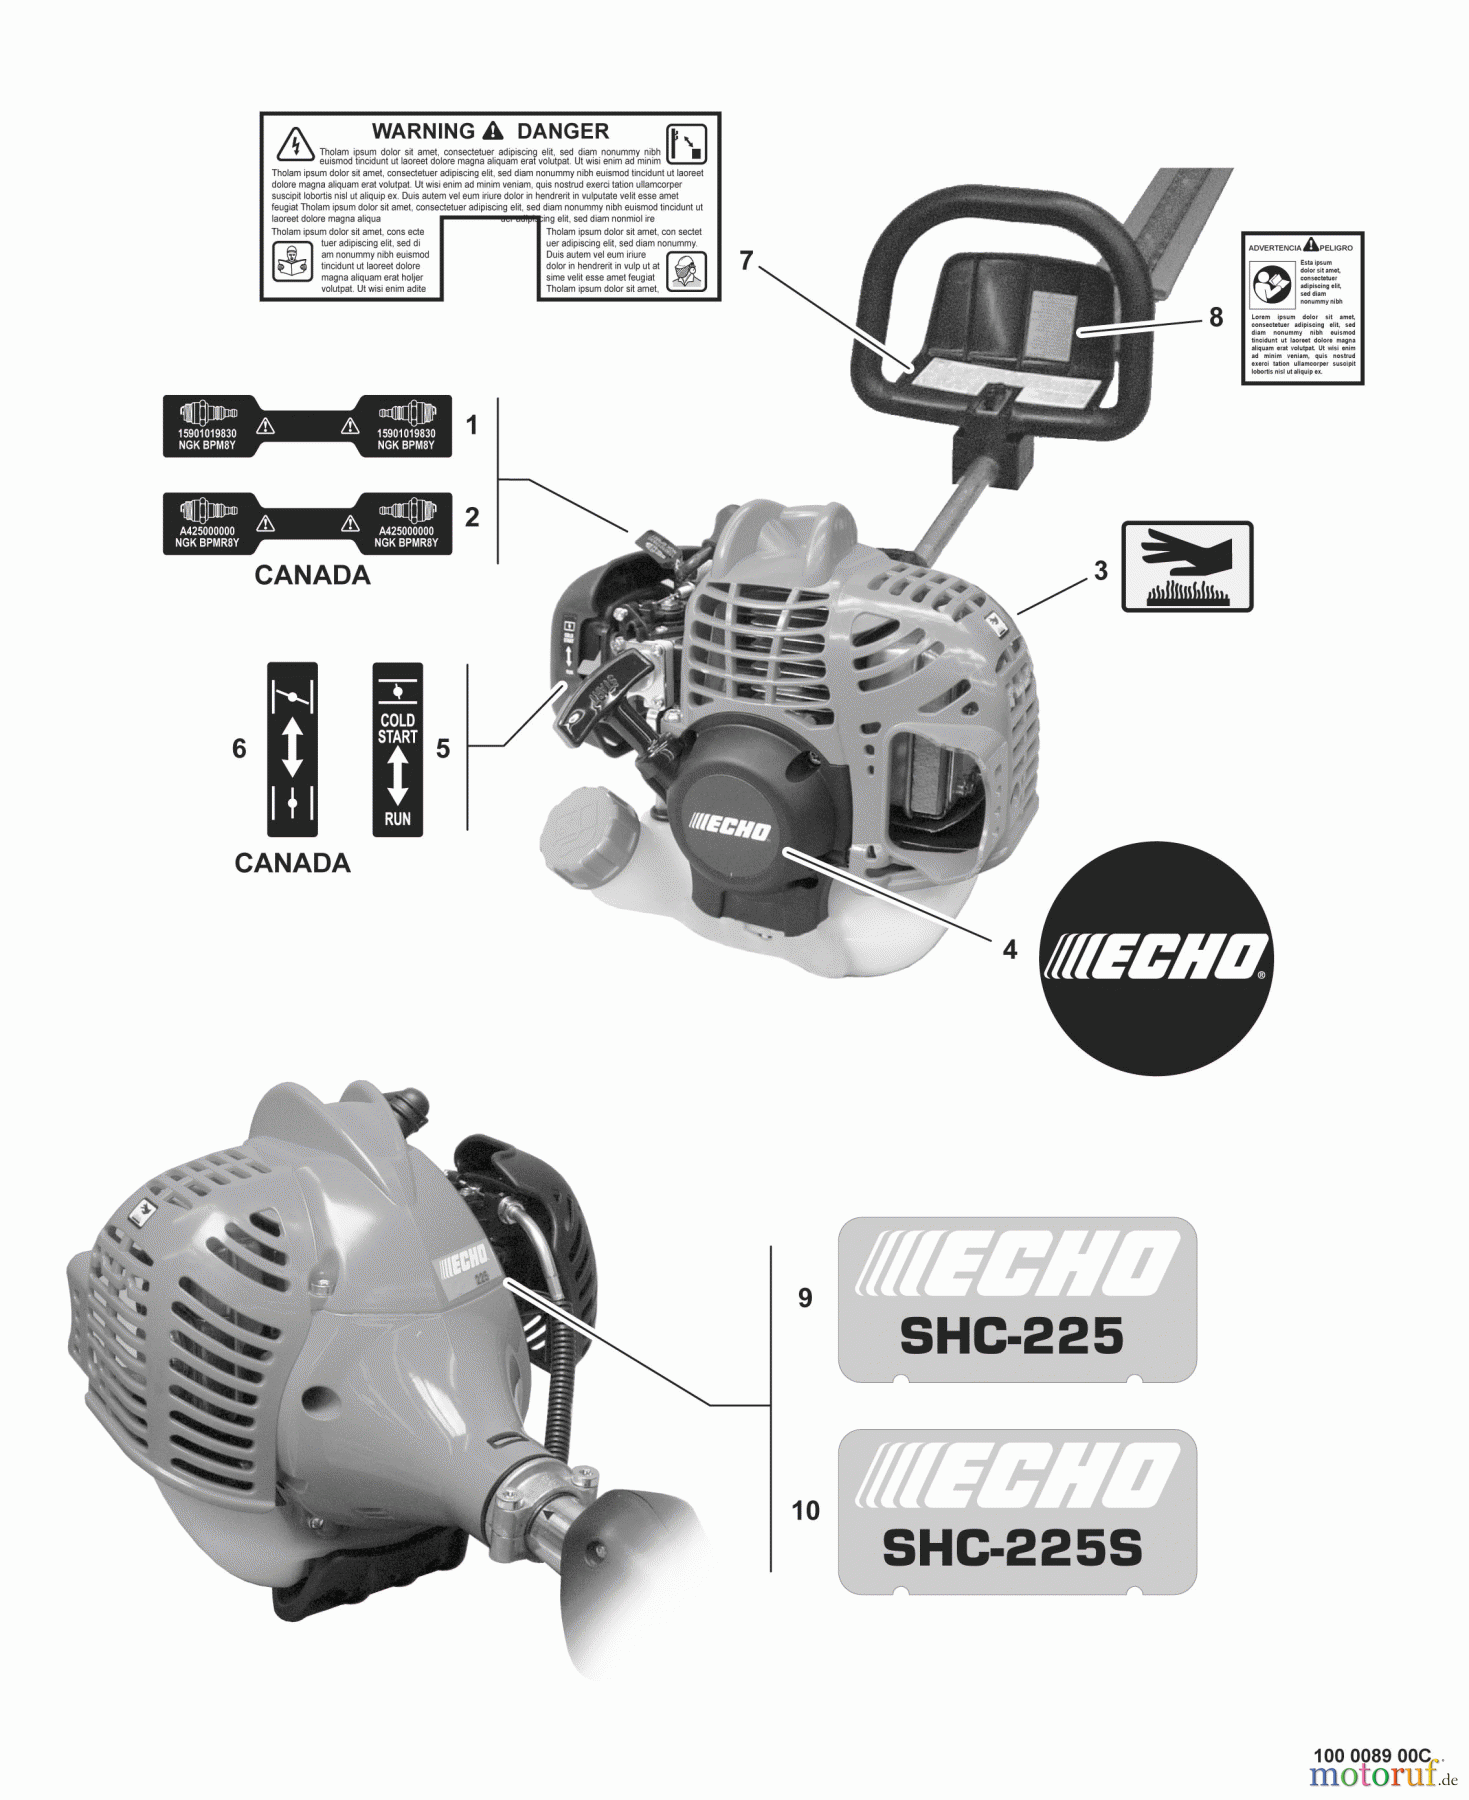  Echo Heckenscheren SHC-225S - Echo Shaft Hedge Trimmer, S/N: S86111001001 - S86111999999 Labels